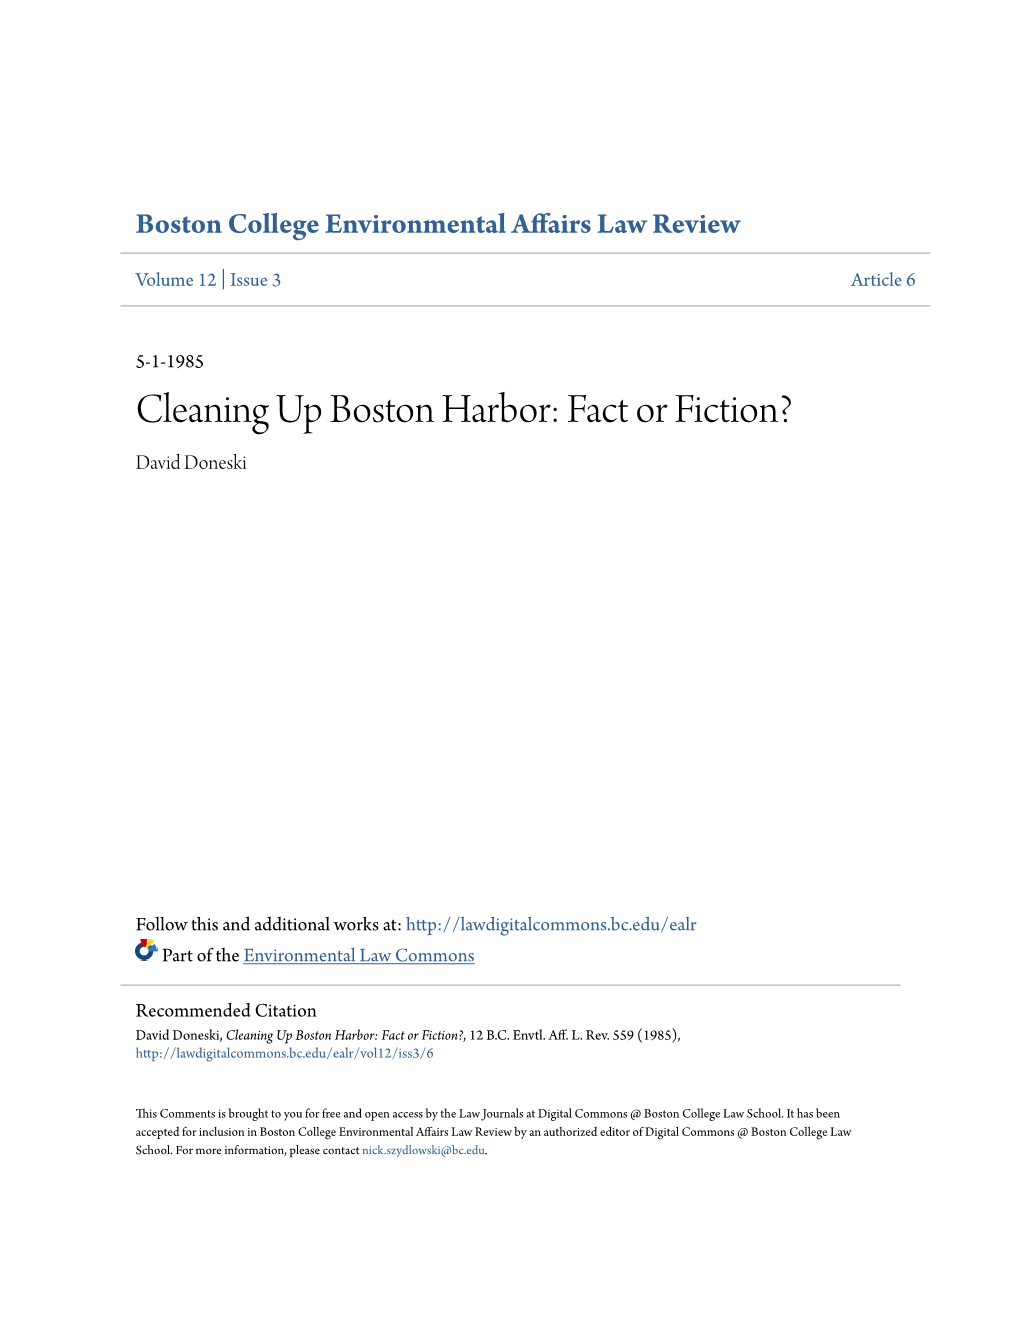 Cleaning up Boston Harbor: Fact Or Fiction? David Doneski